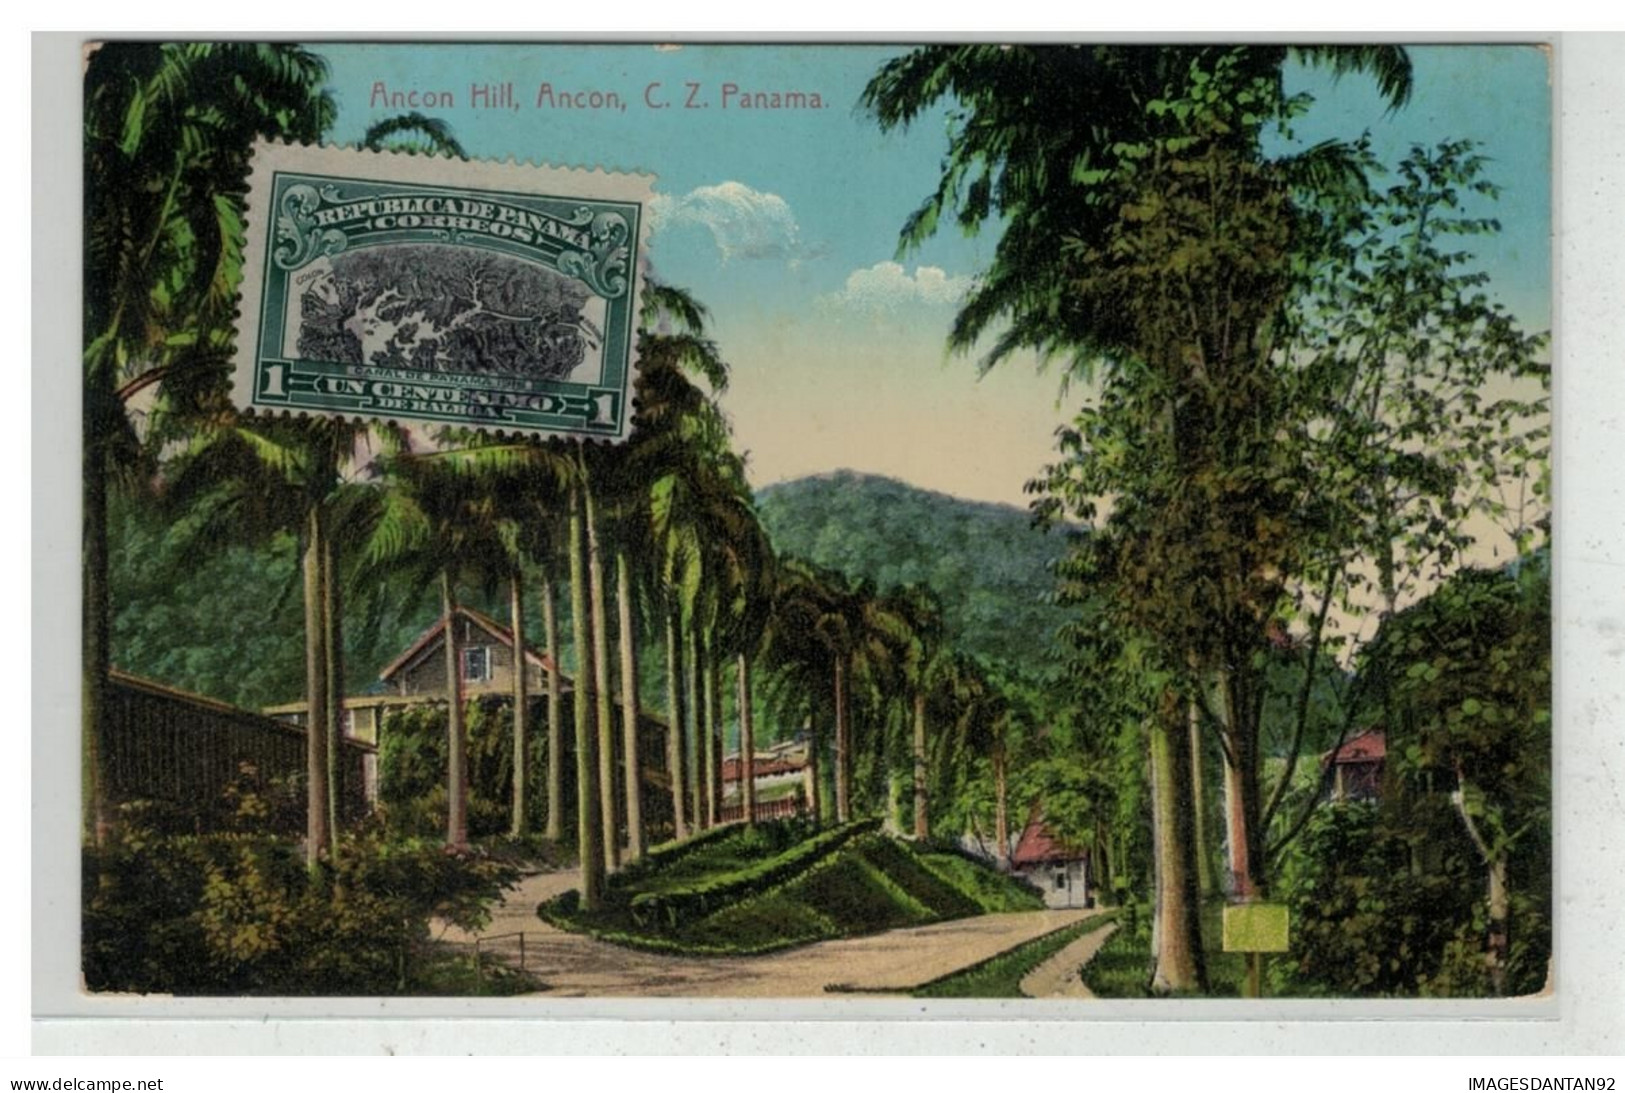 PANAMA #17624 ANCON HILL - Panamá